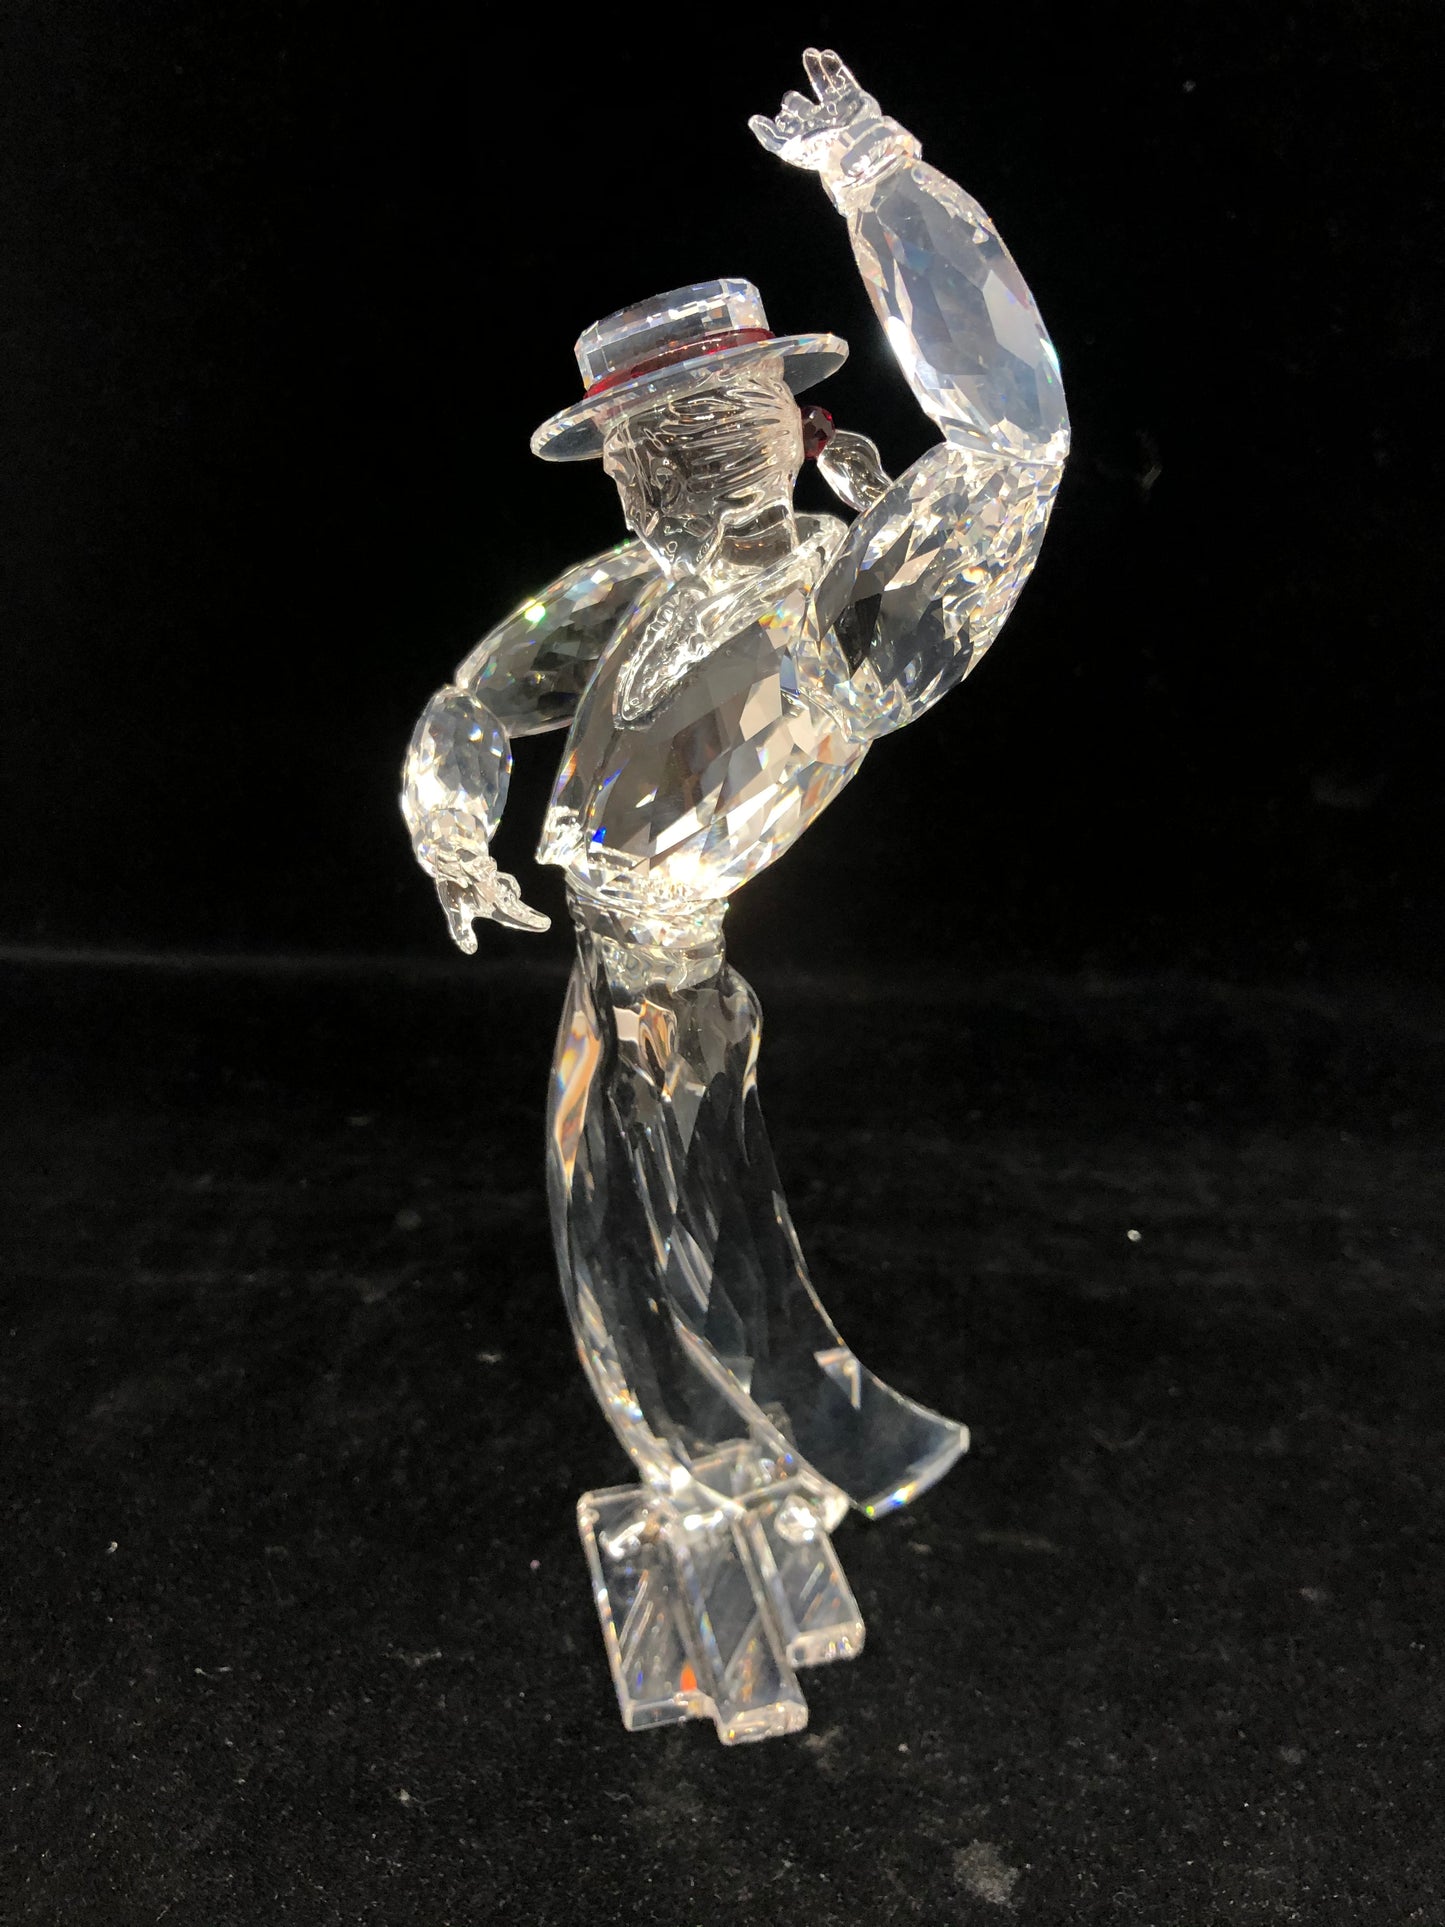 Swarovski "Magic of Dance" Antonio SCS 2003 Crystal Figurine